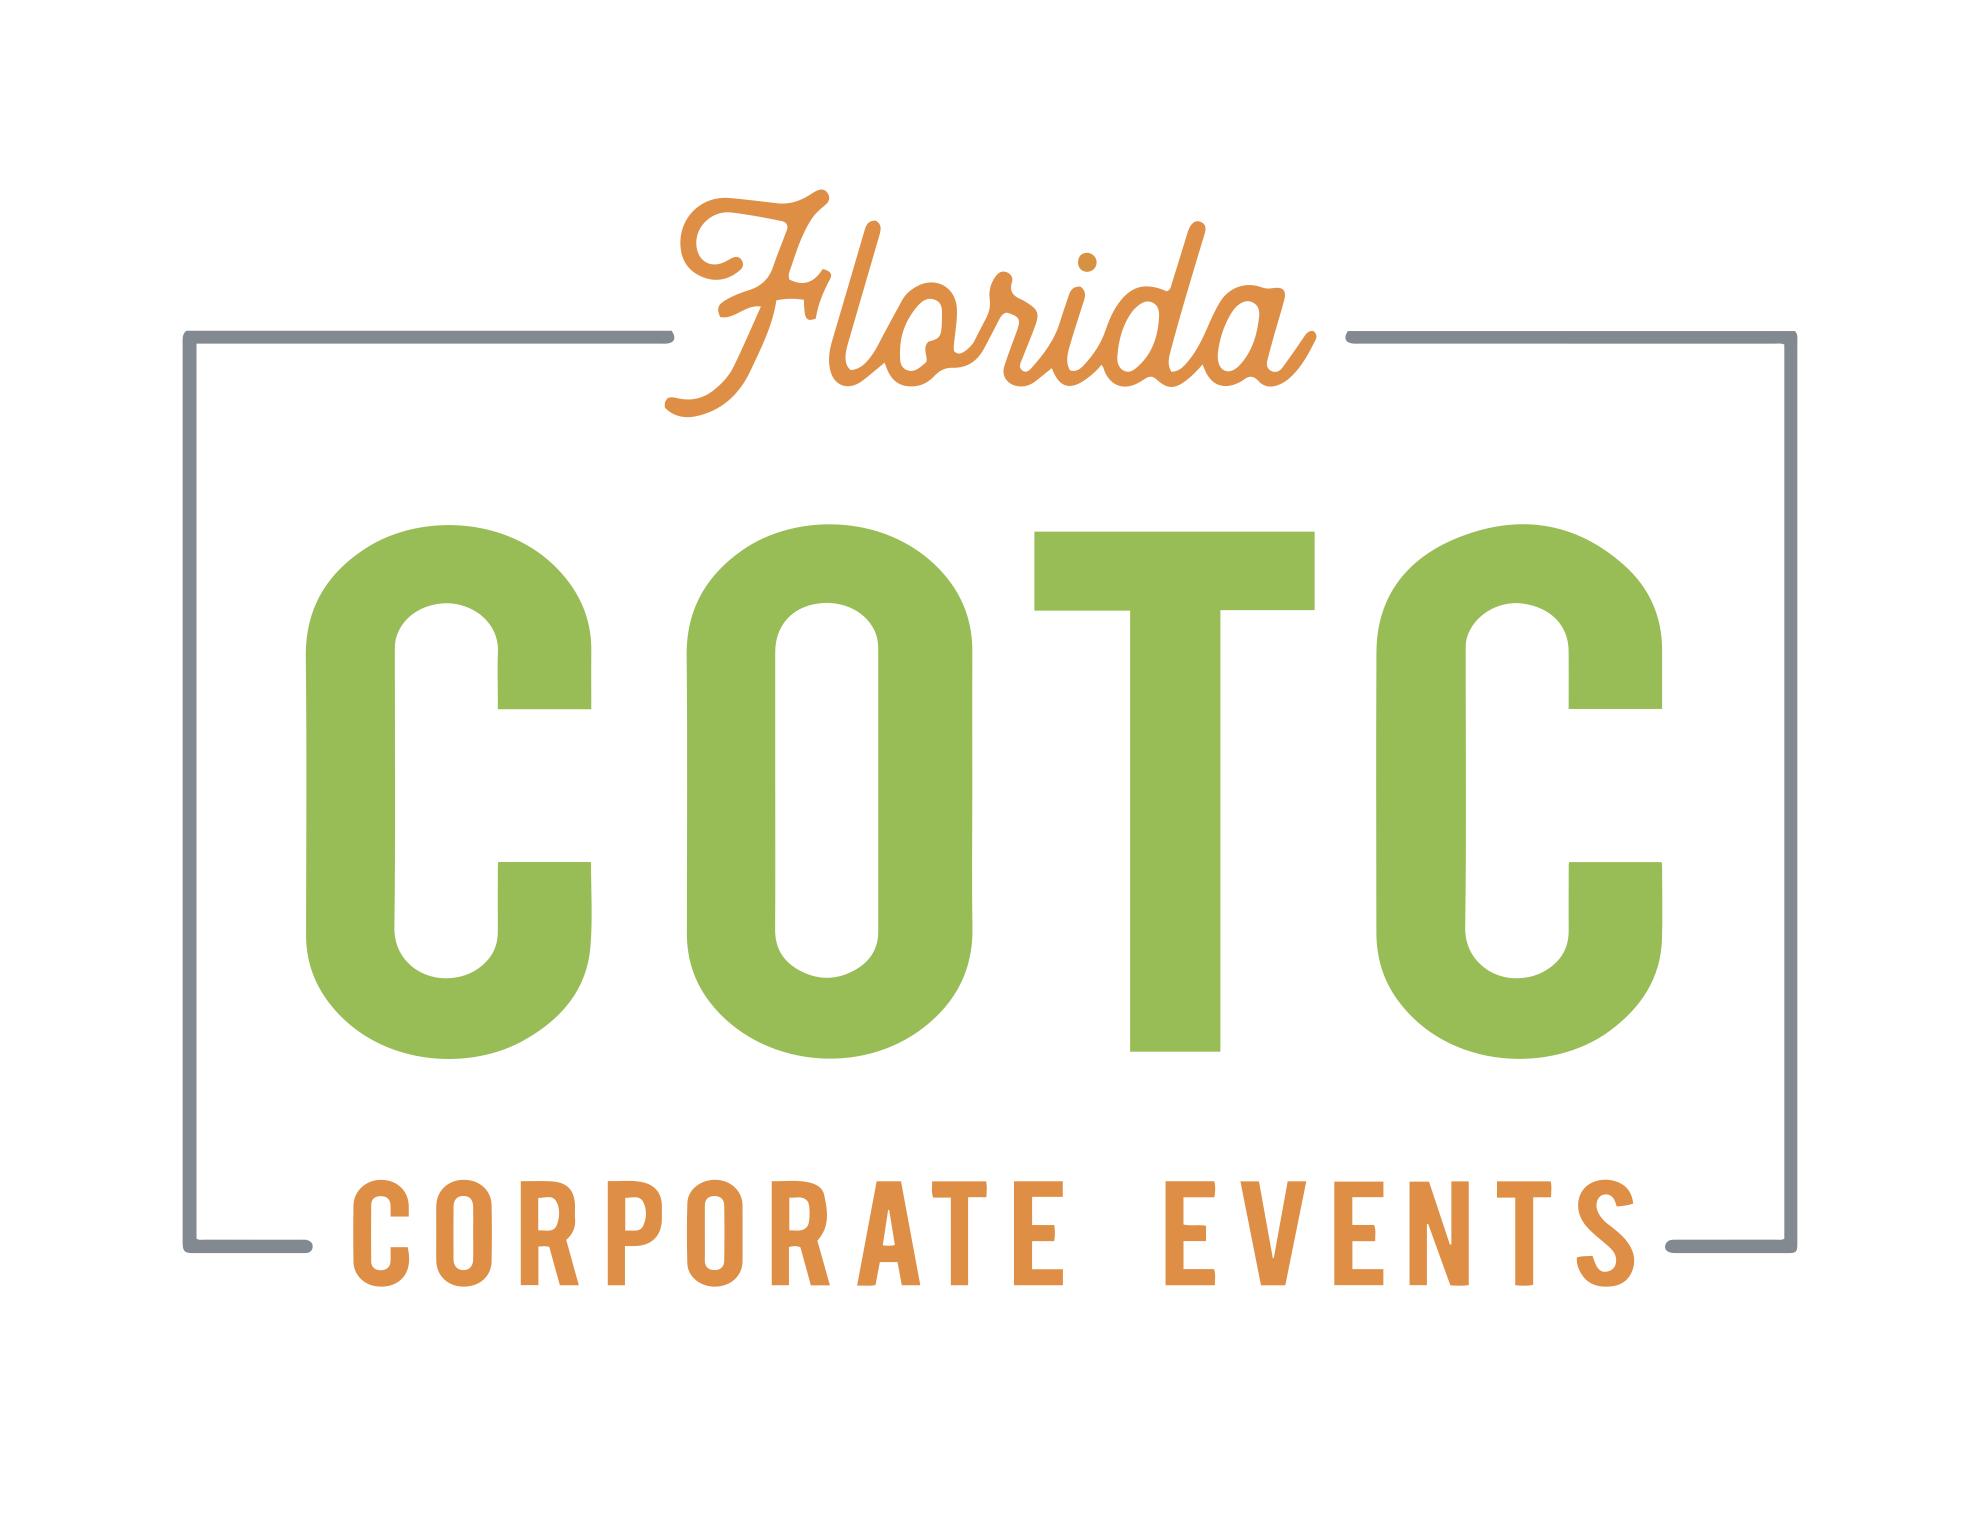 COTC Corporate Events